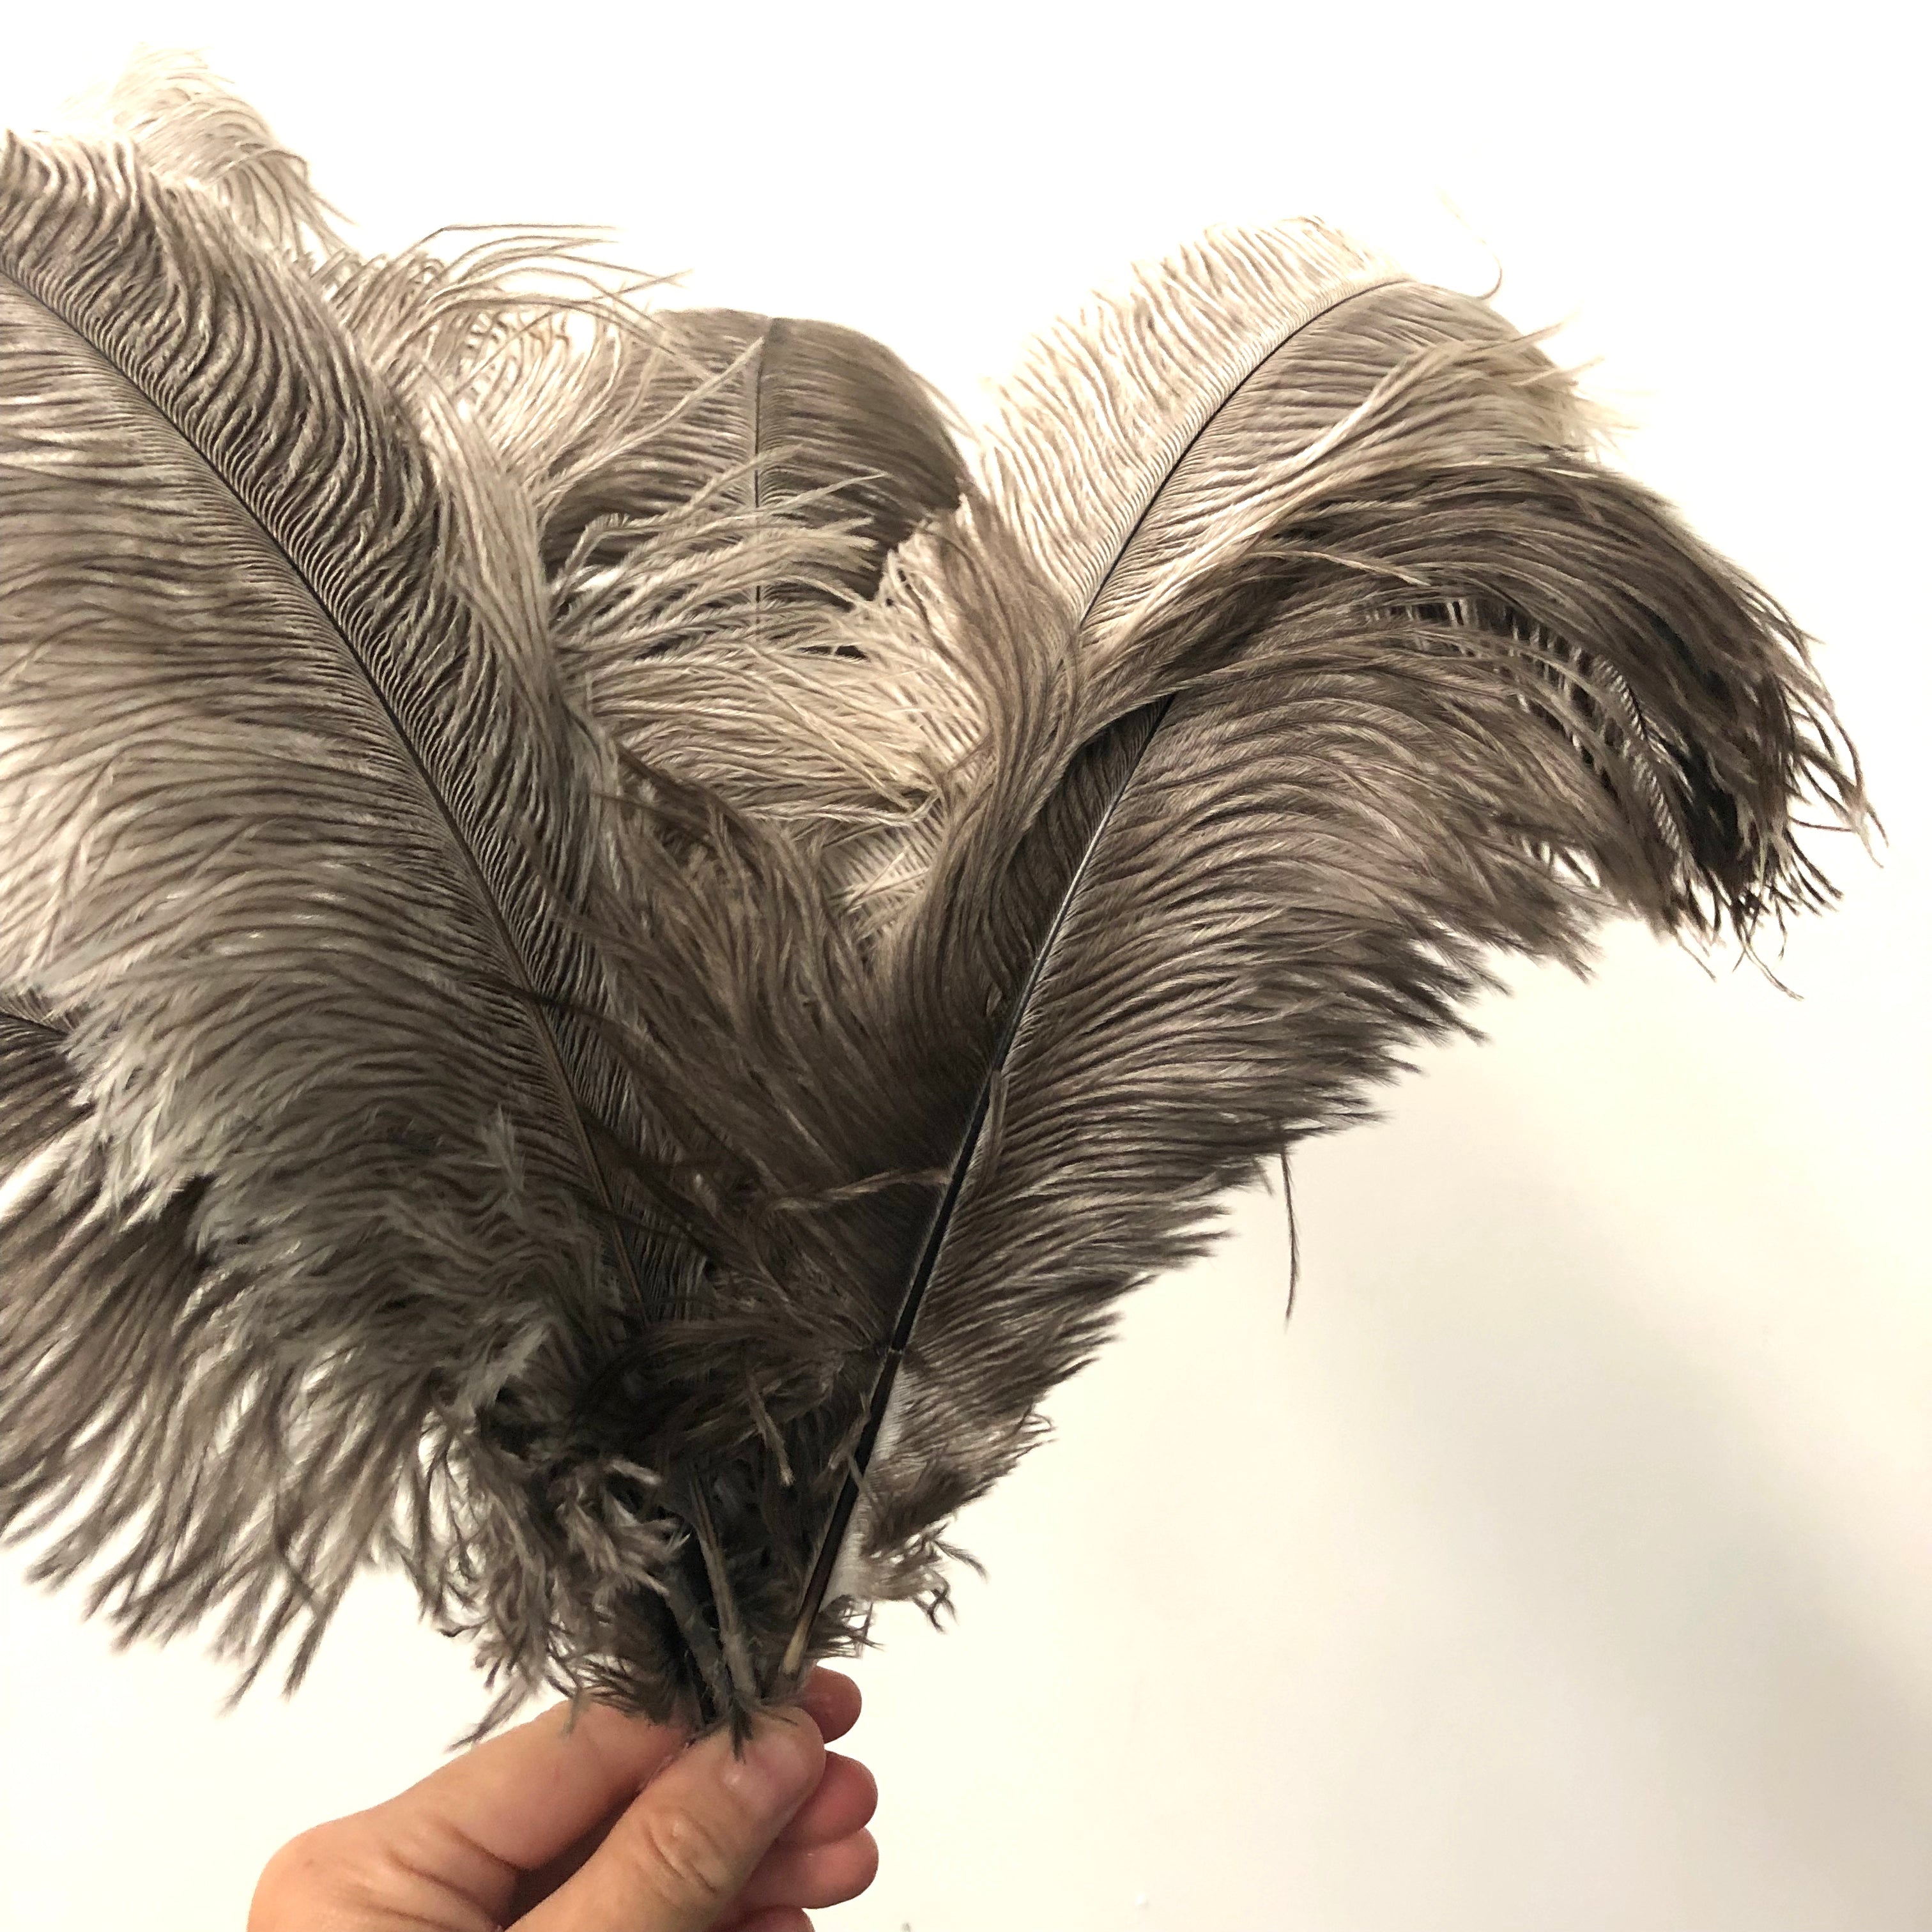 Ostrich Blondine Feather 25-40cm x 5 pcs - Natural ((SECONDS))